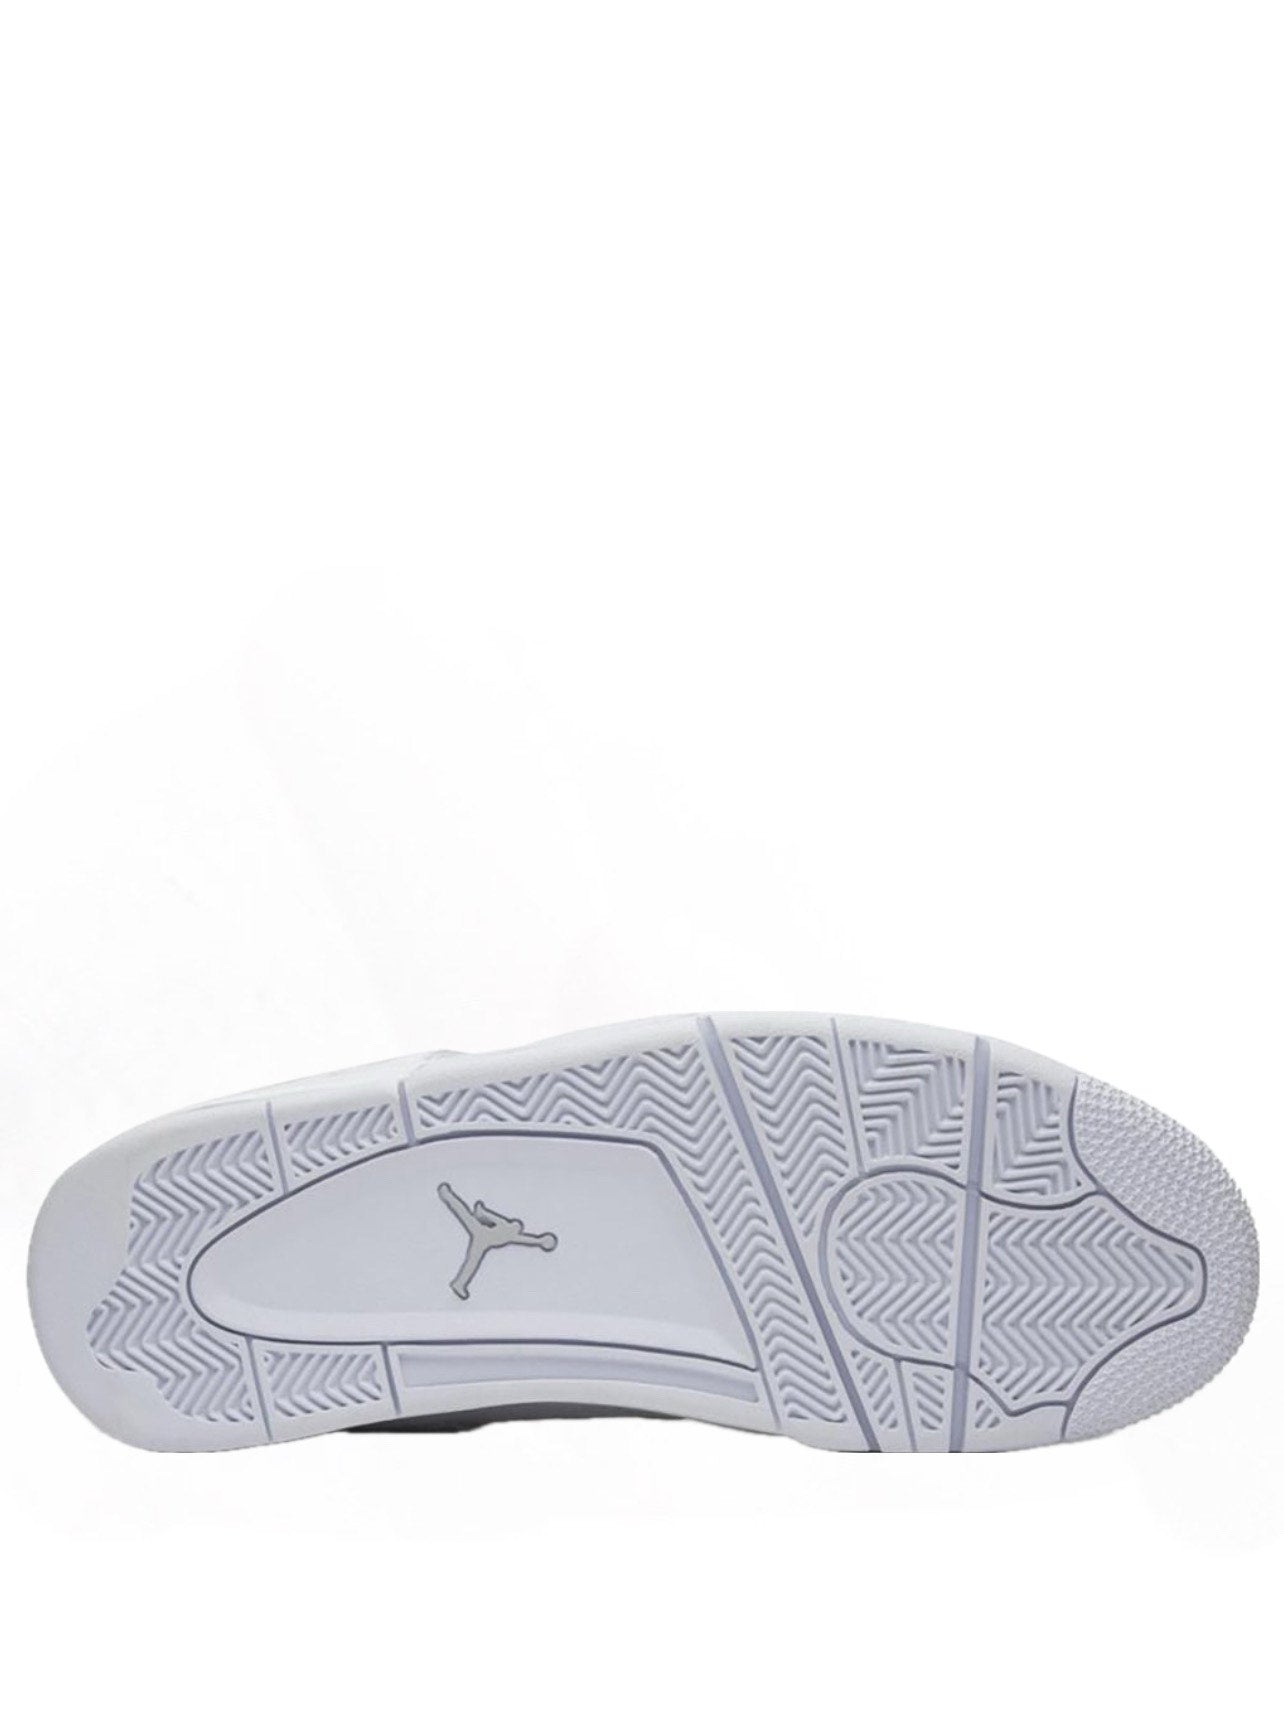 Air Jordan Retro 4 Pure Money